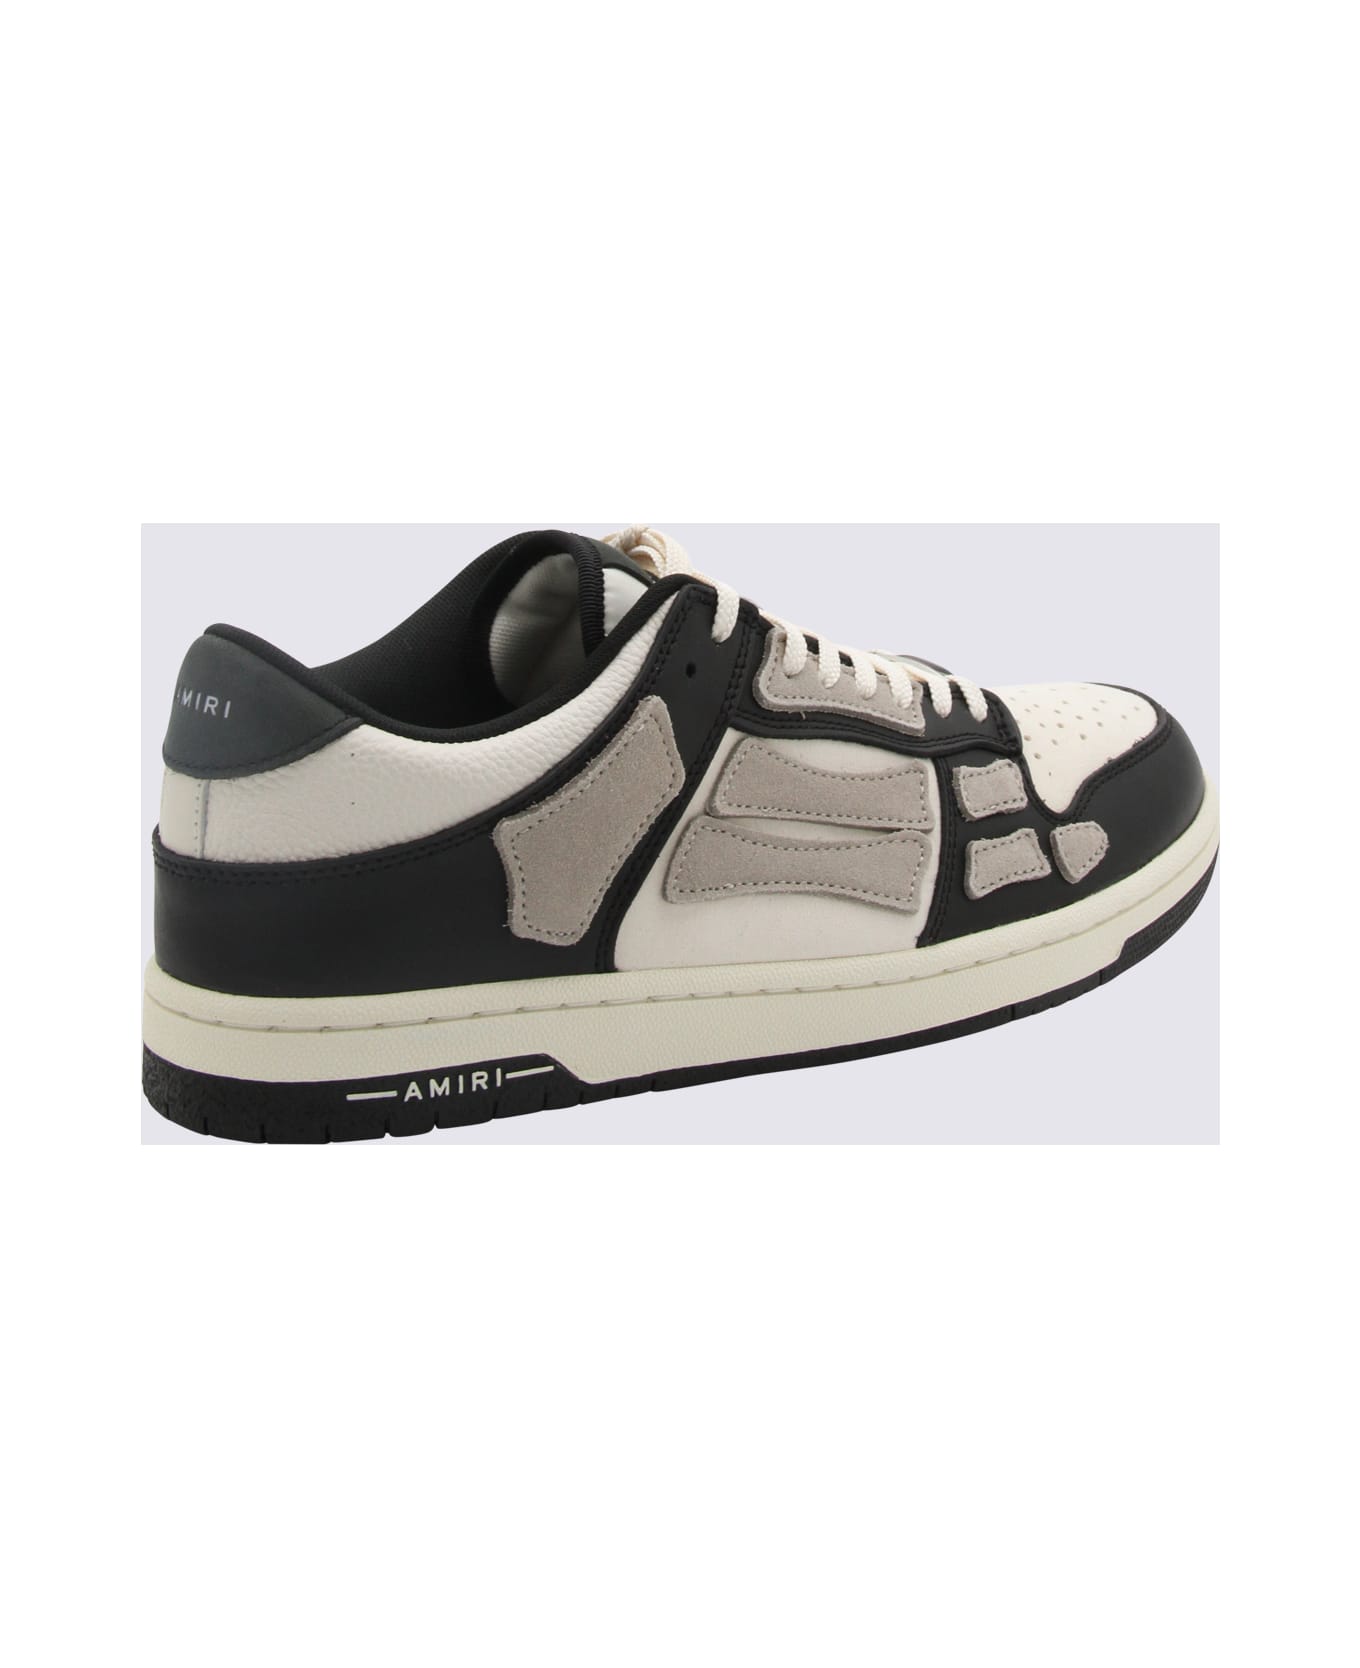 AMIRI Black Alabaster Leather Skel Sneakers - Nero e Bianco